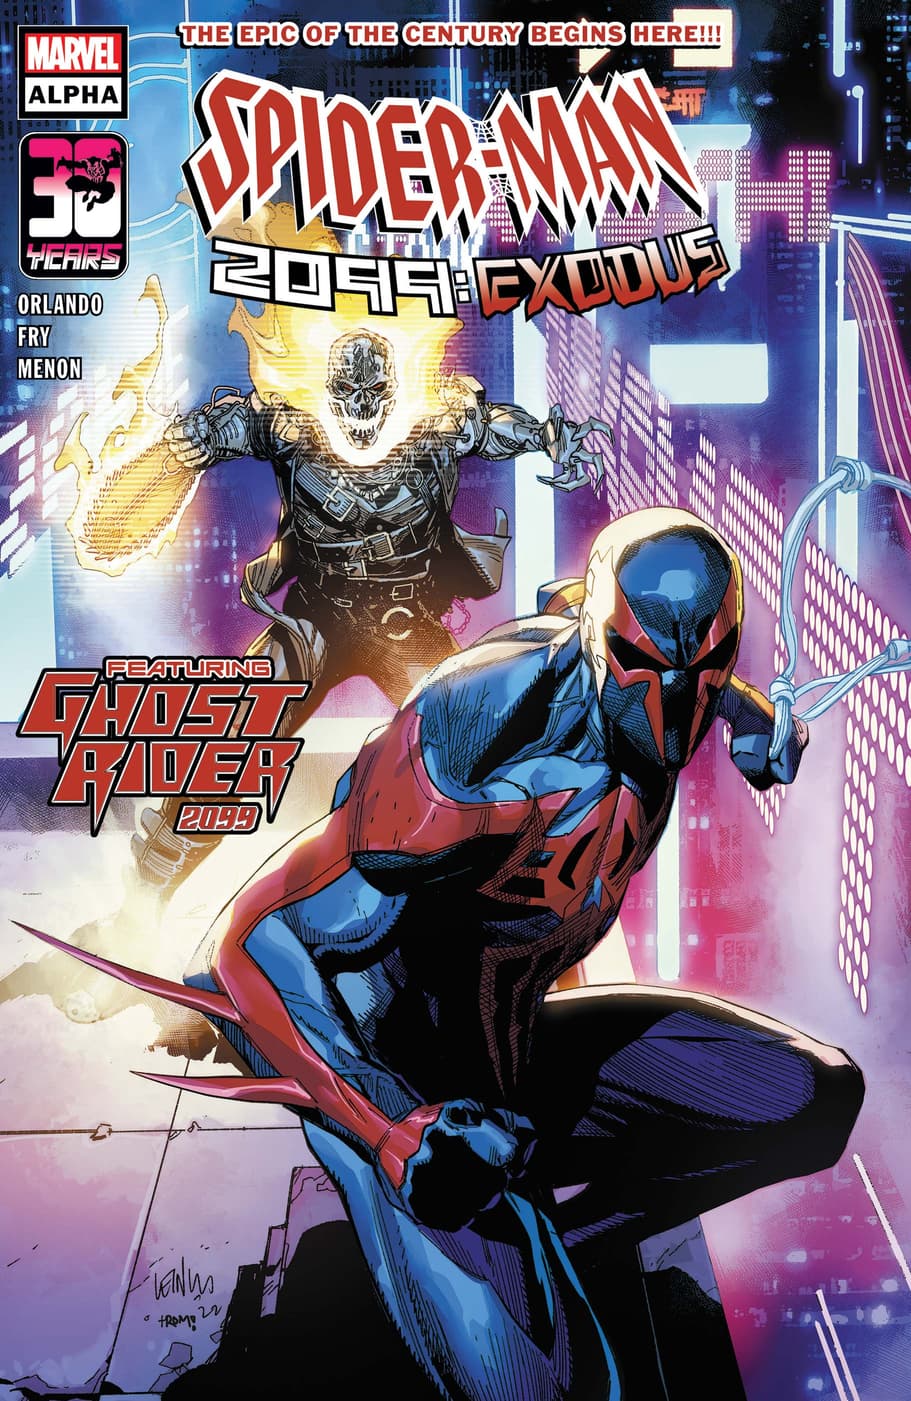 SPIDER-MAN 2099: EXODUS ALPHA #1 main cover by Leinil Francis Yu